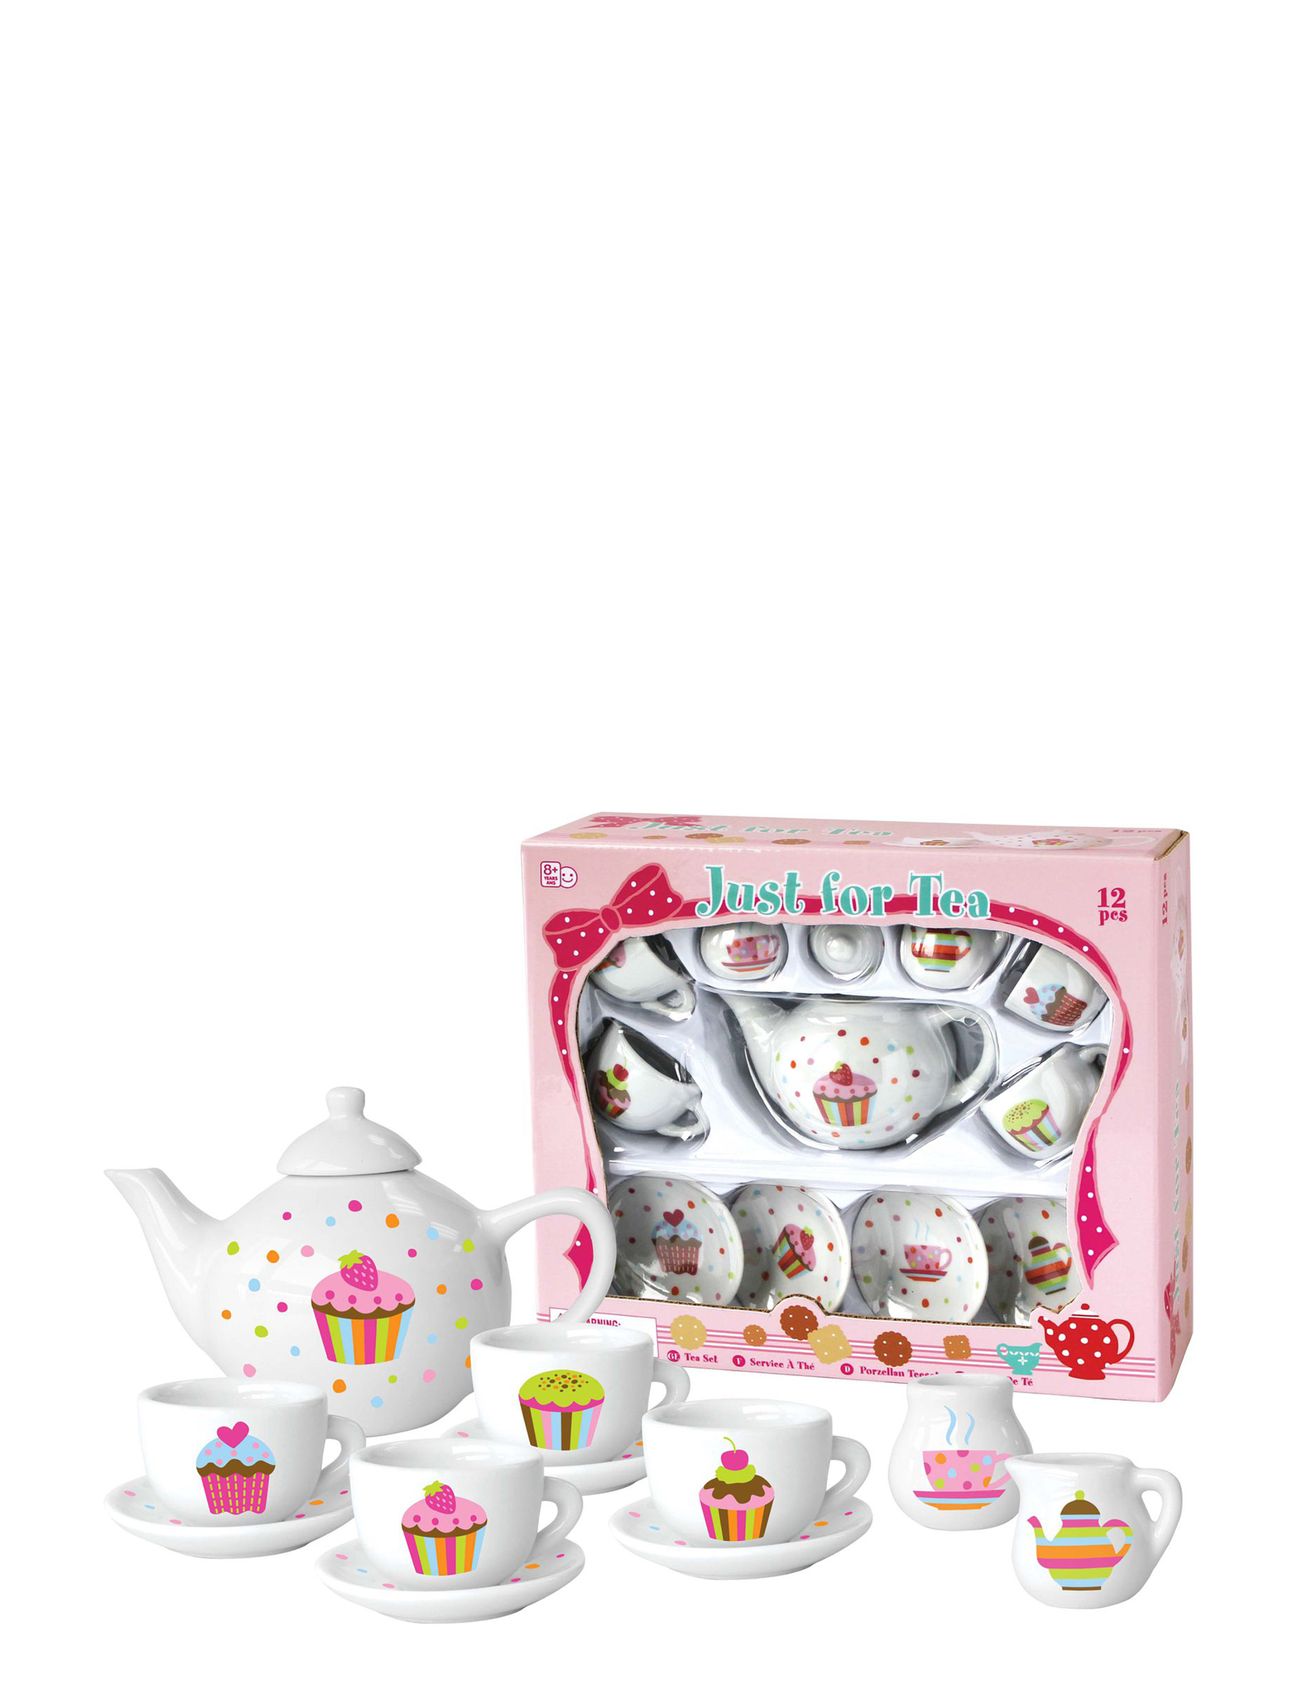 Tea Set "Cupcake" In Porcelain, 12 Pcs. Toys Toy Kitchen & Accessories Coffee & Tea Sets Multi/patterned Magni Toys